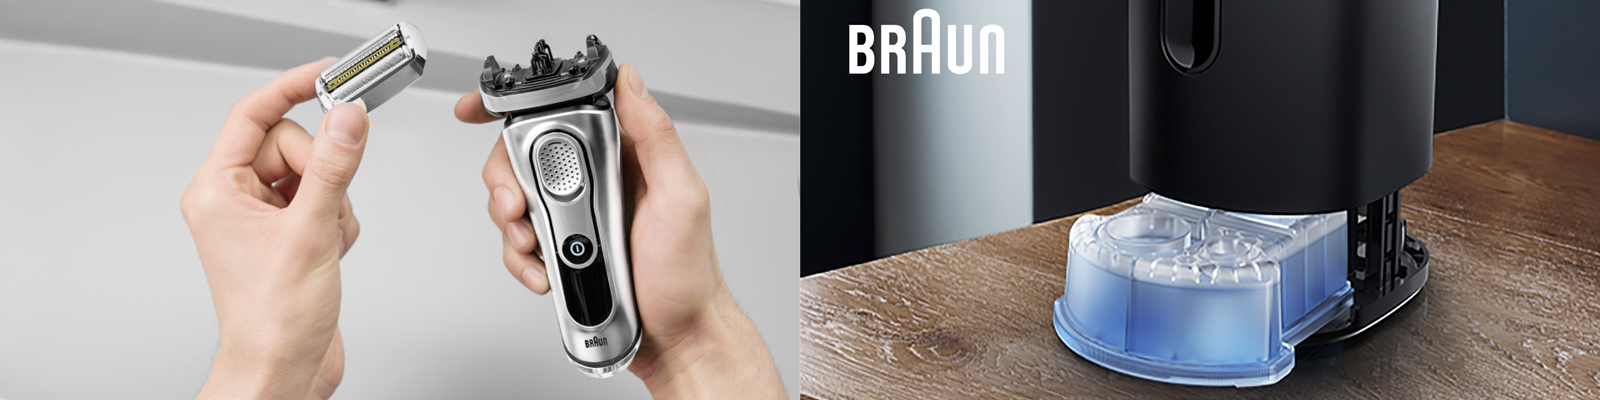 аксессуары для мужского бритья Braun